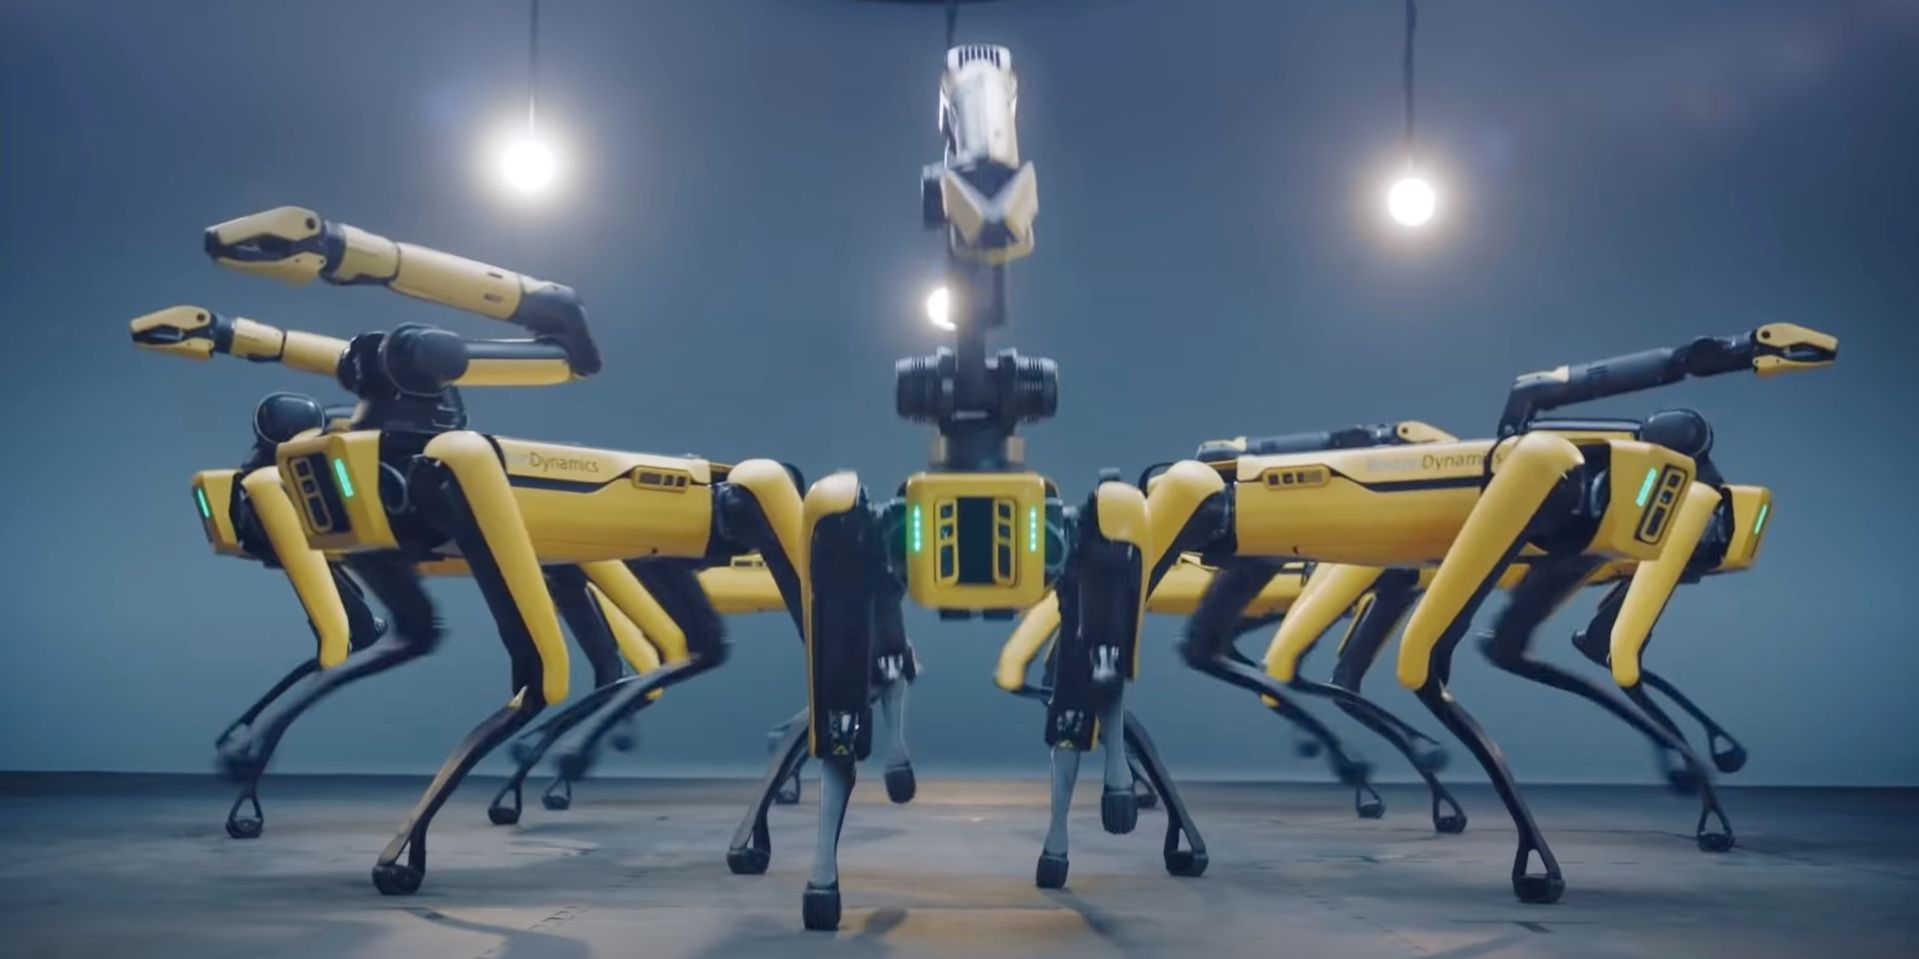 Boston Dynamics Spot robot dancing to BTS